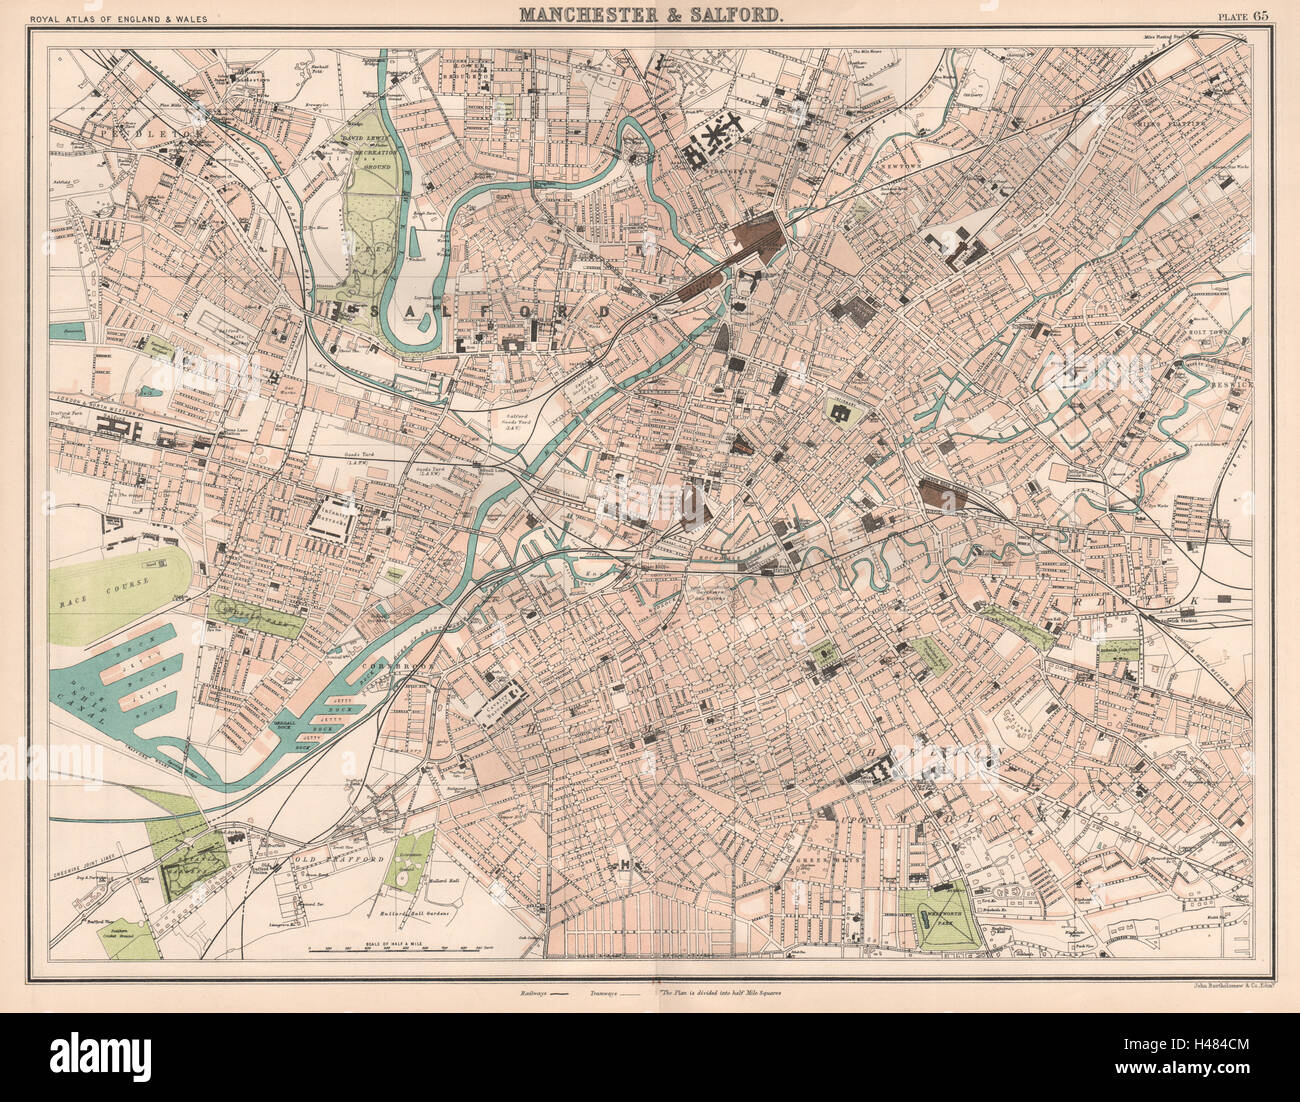 LEONARDS antique town city plans BARTHOLOMEW 1898 old map HASTINGS & ST